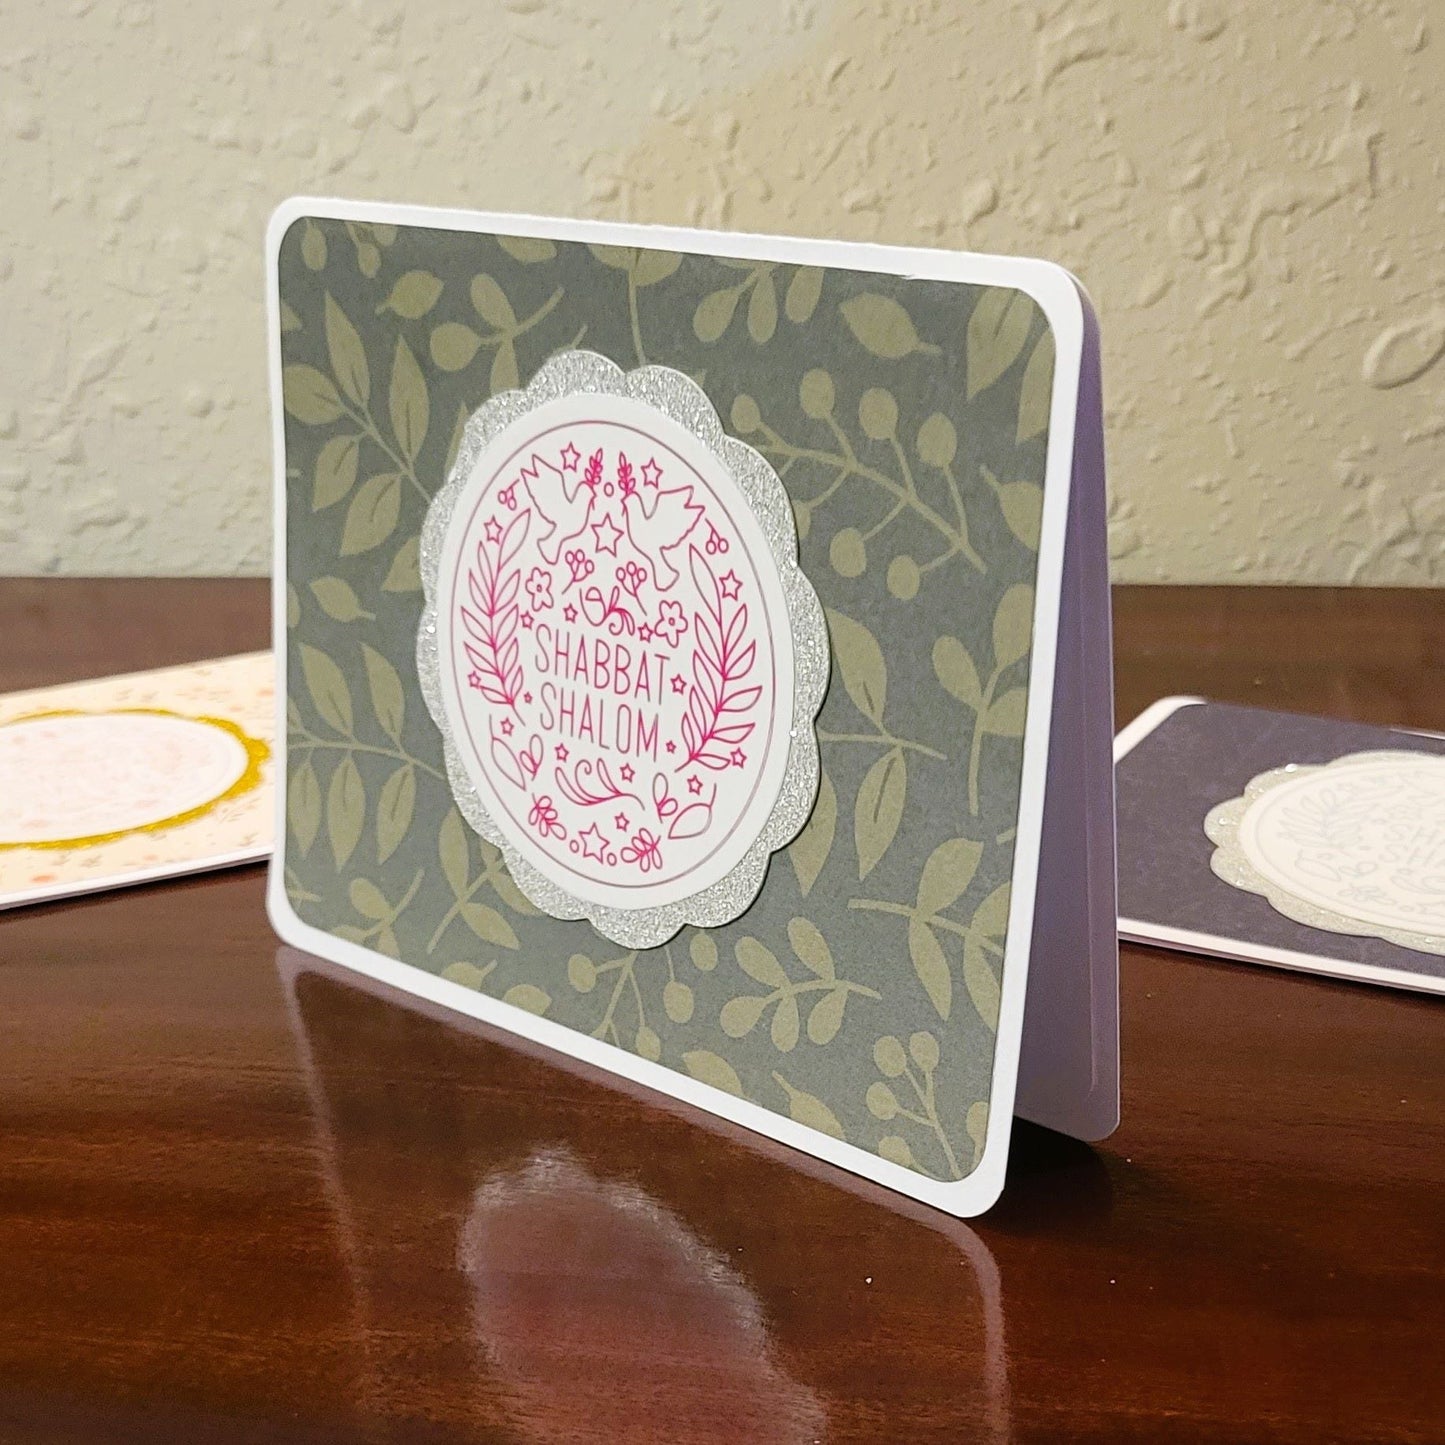 Handmade Greeting Card - Shabbat Shalom - Green & Pink - A2 size - 31 Rubies Designs